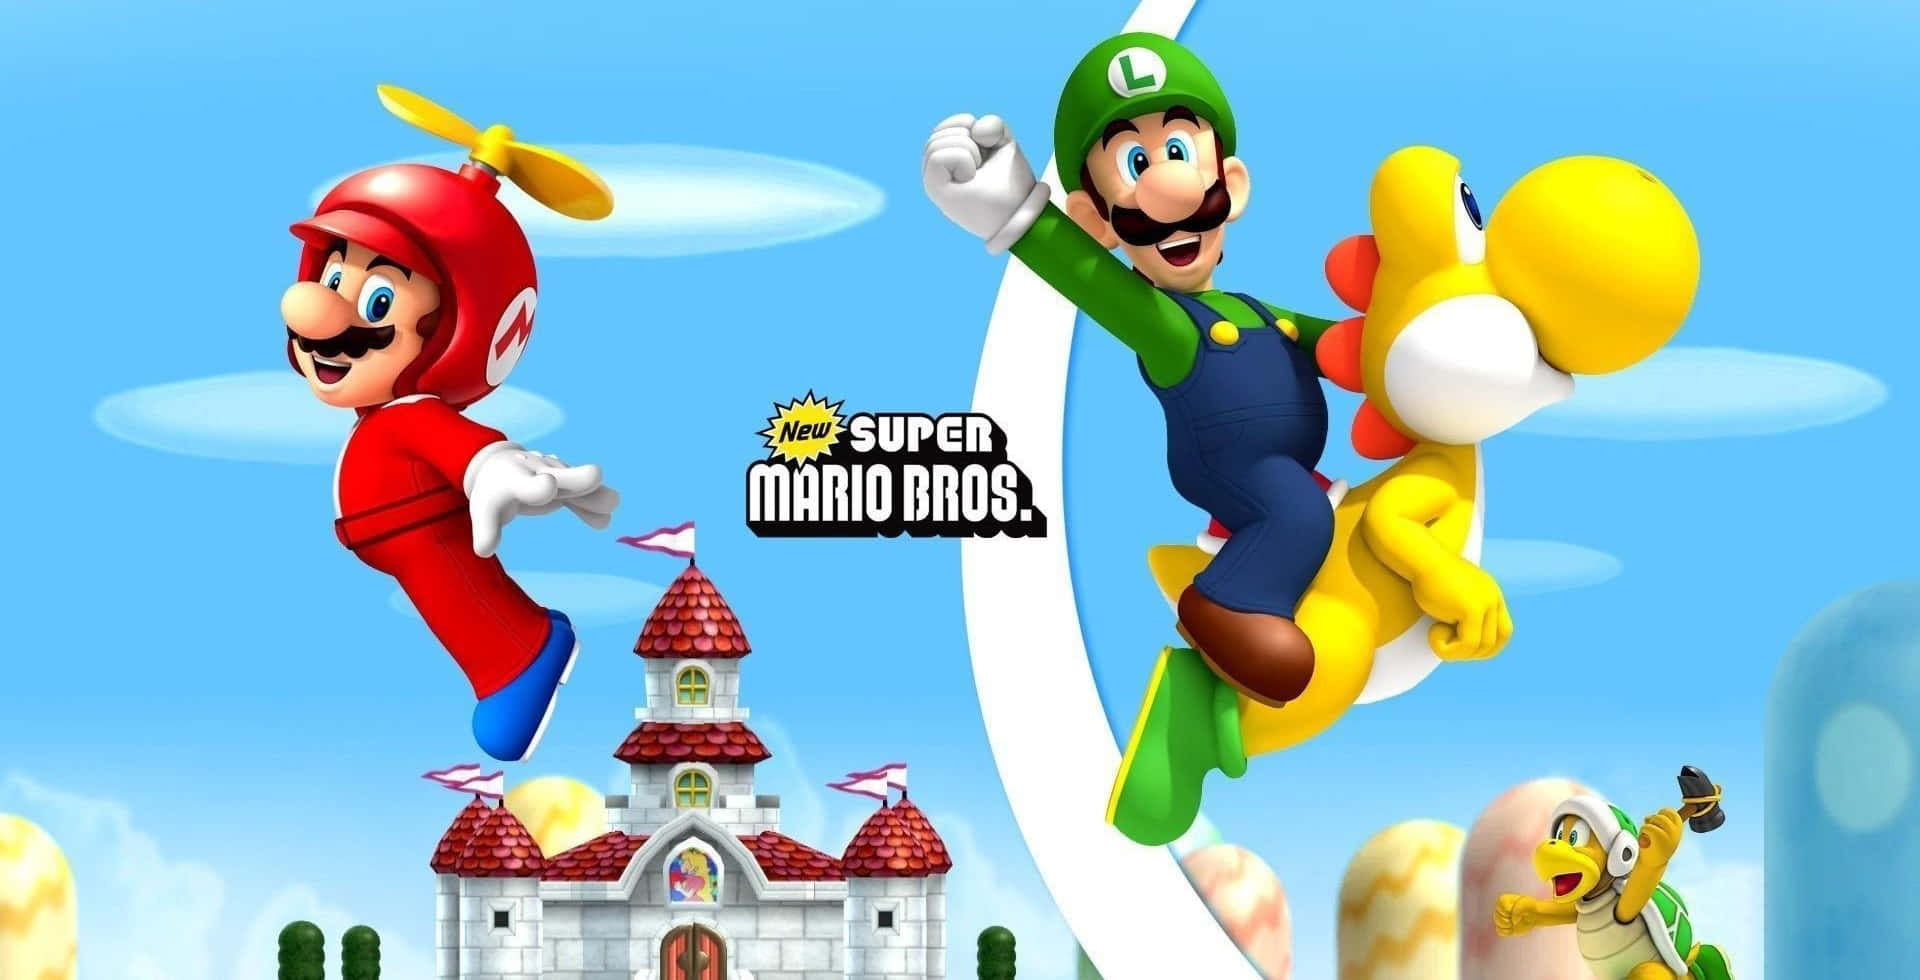 "Go on a fun adventure with Mario and Luigi!"